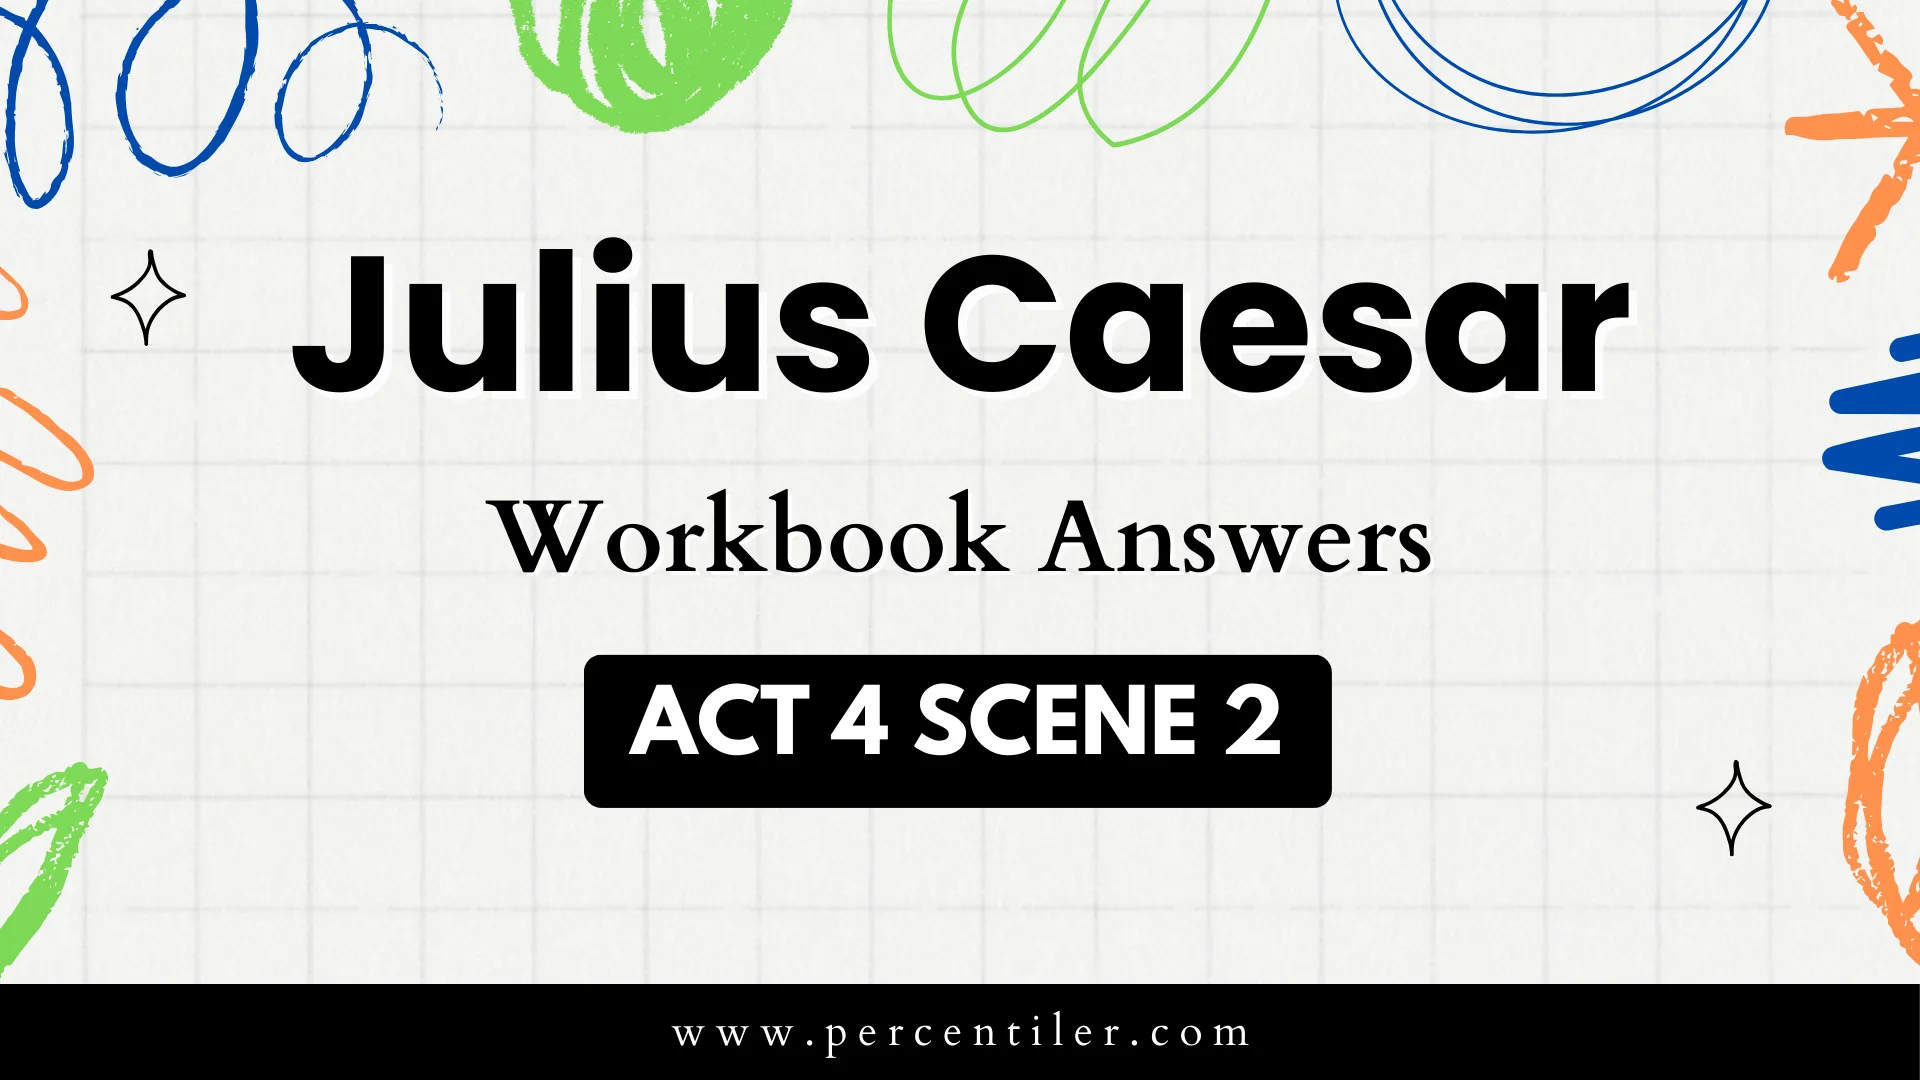 ICSE Julius Caesar Workbook answer : Act 4 Scene 2